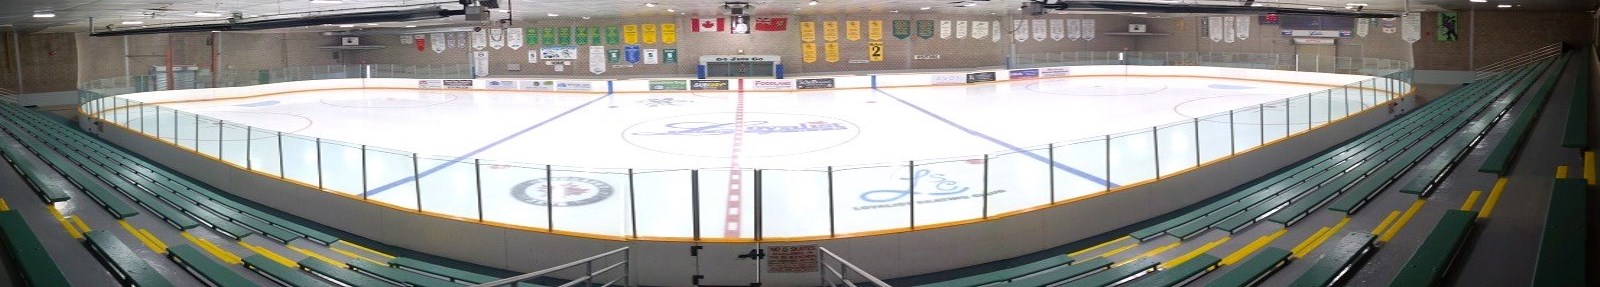 view of indoor ice rink 